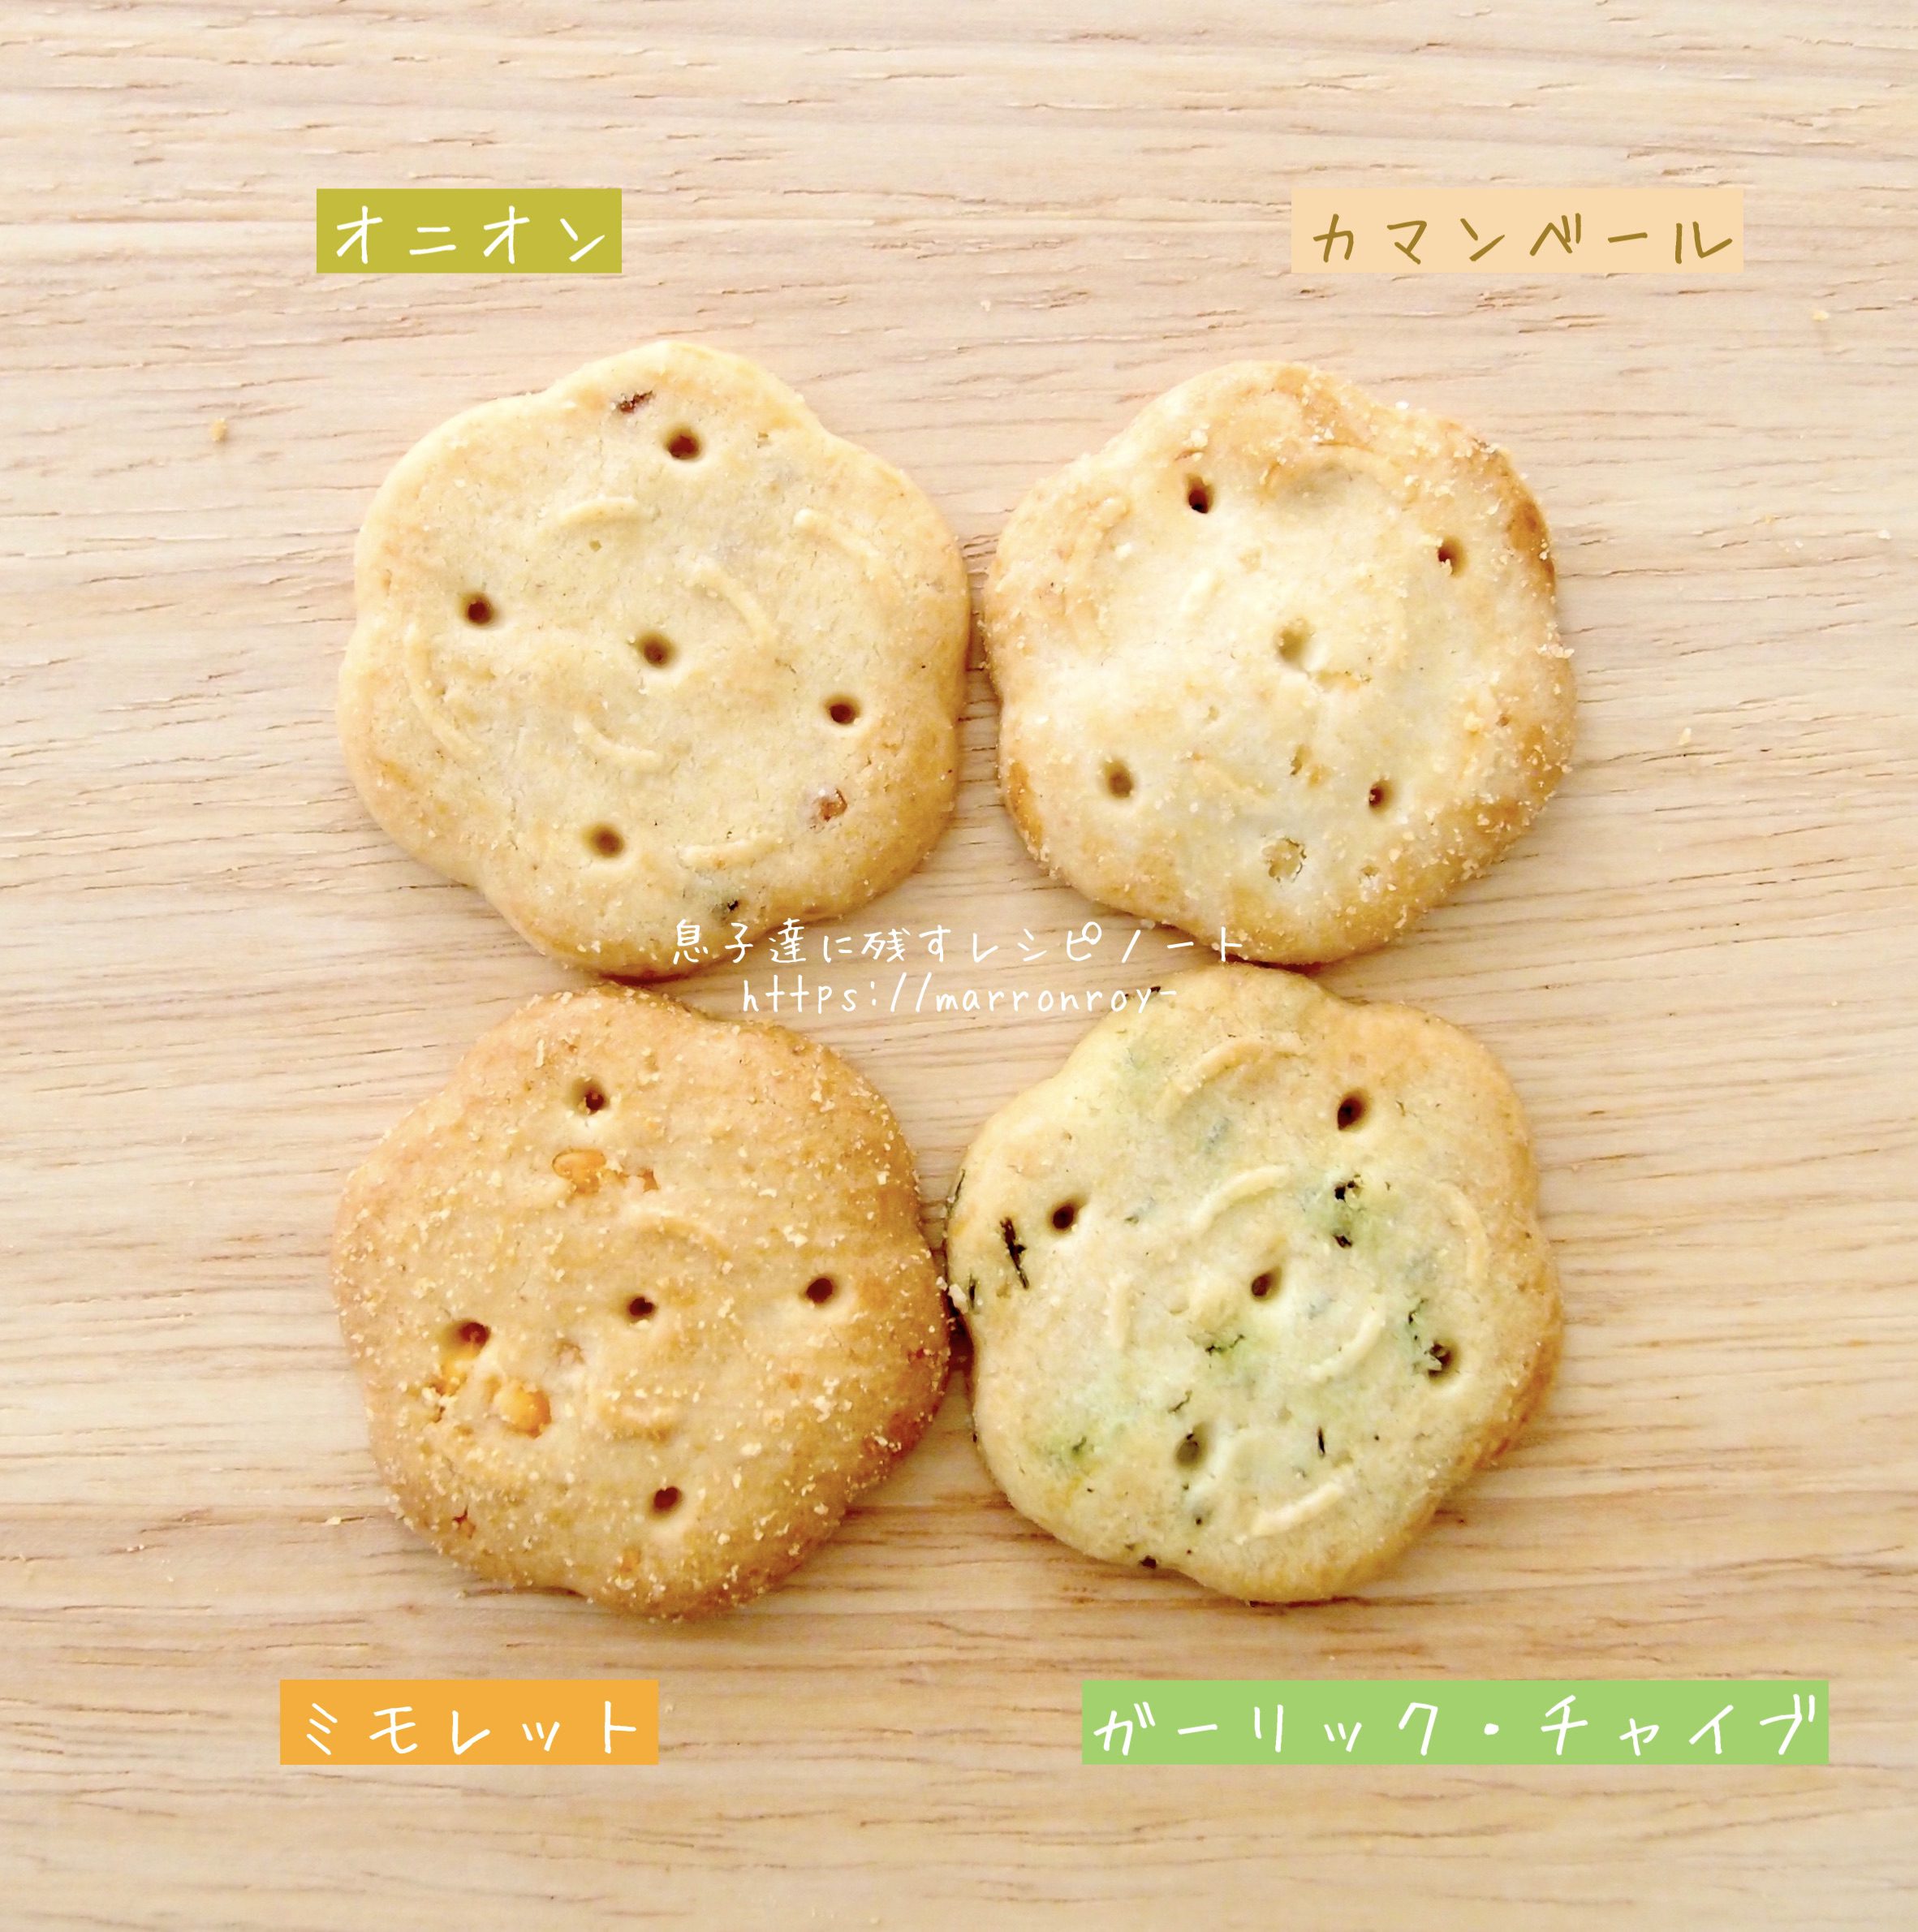 4 cookies